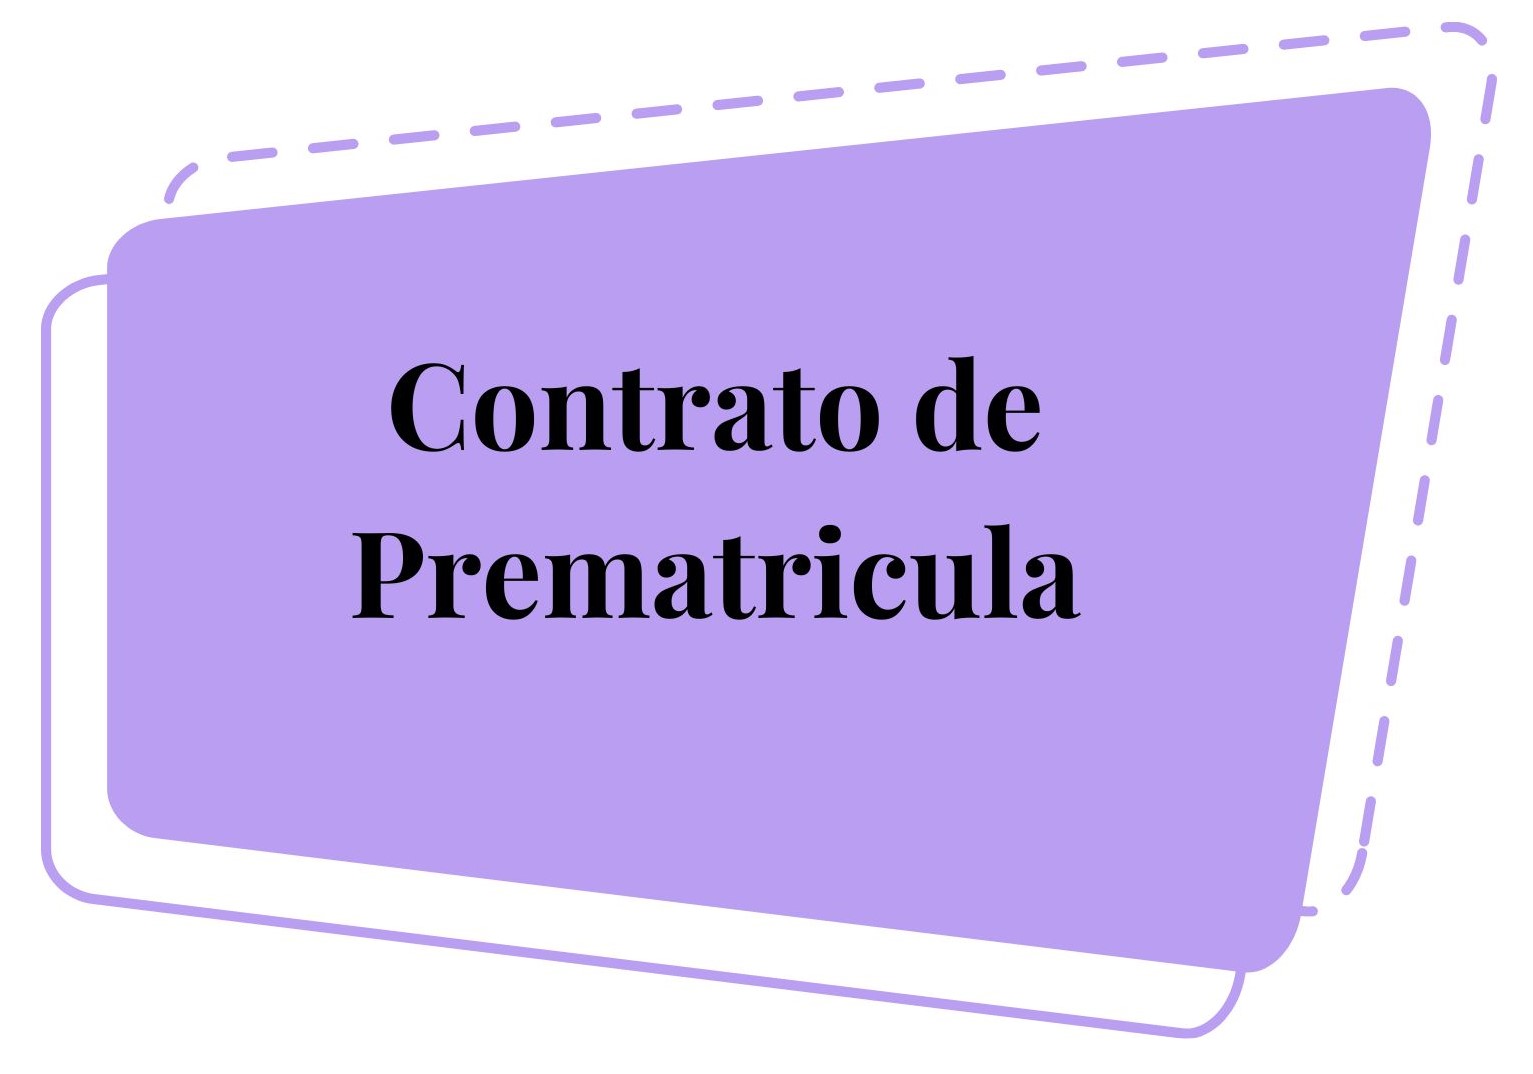 Contratode prematricula25